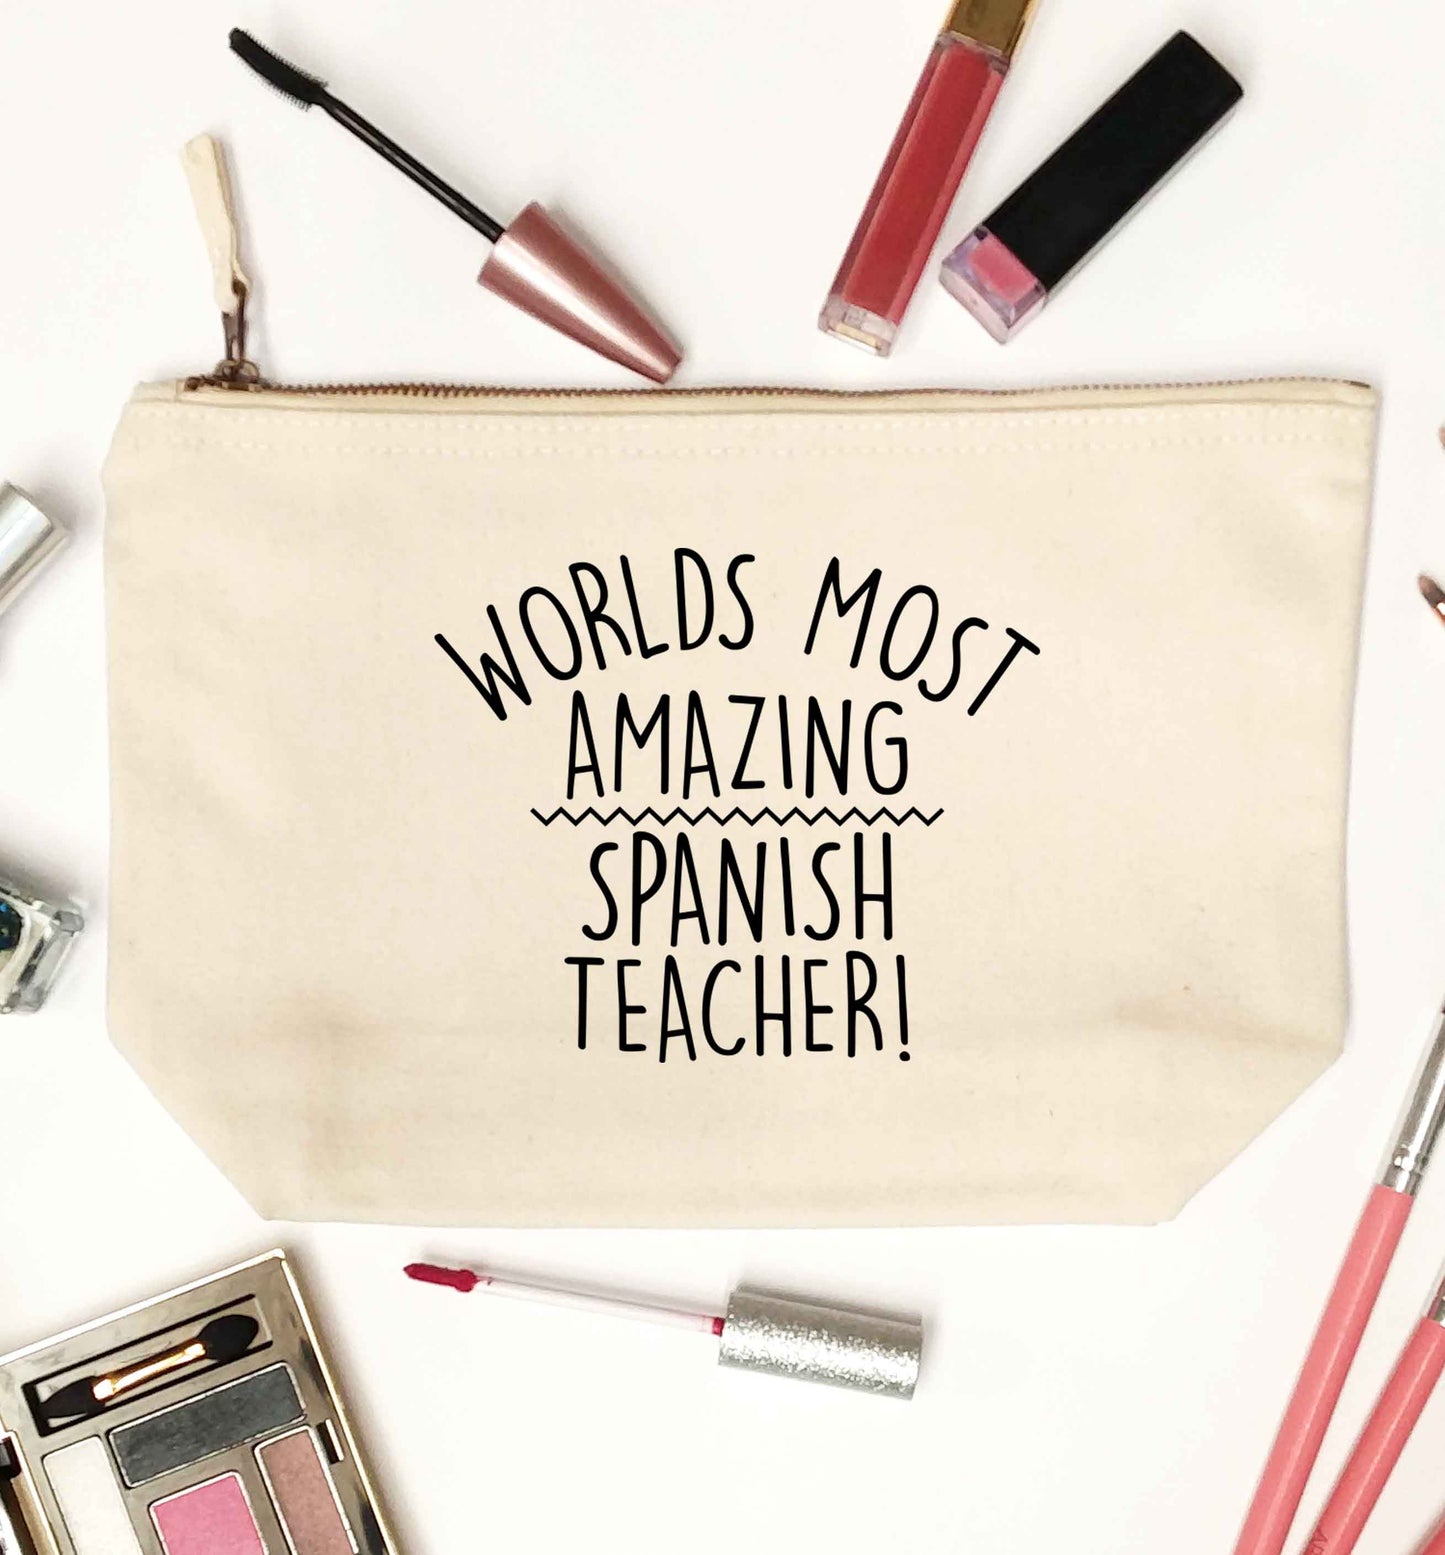 Worlds most amazing Spanish teacher natural makeup bag